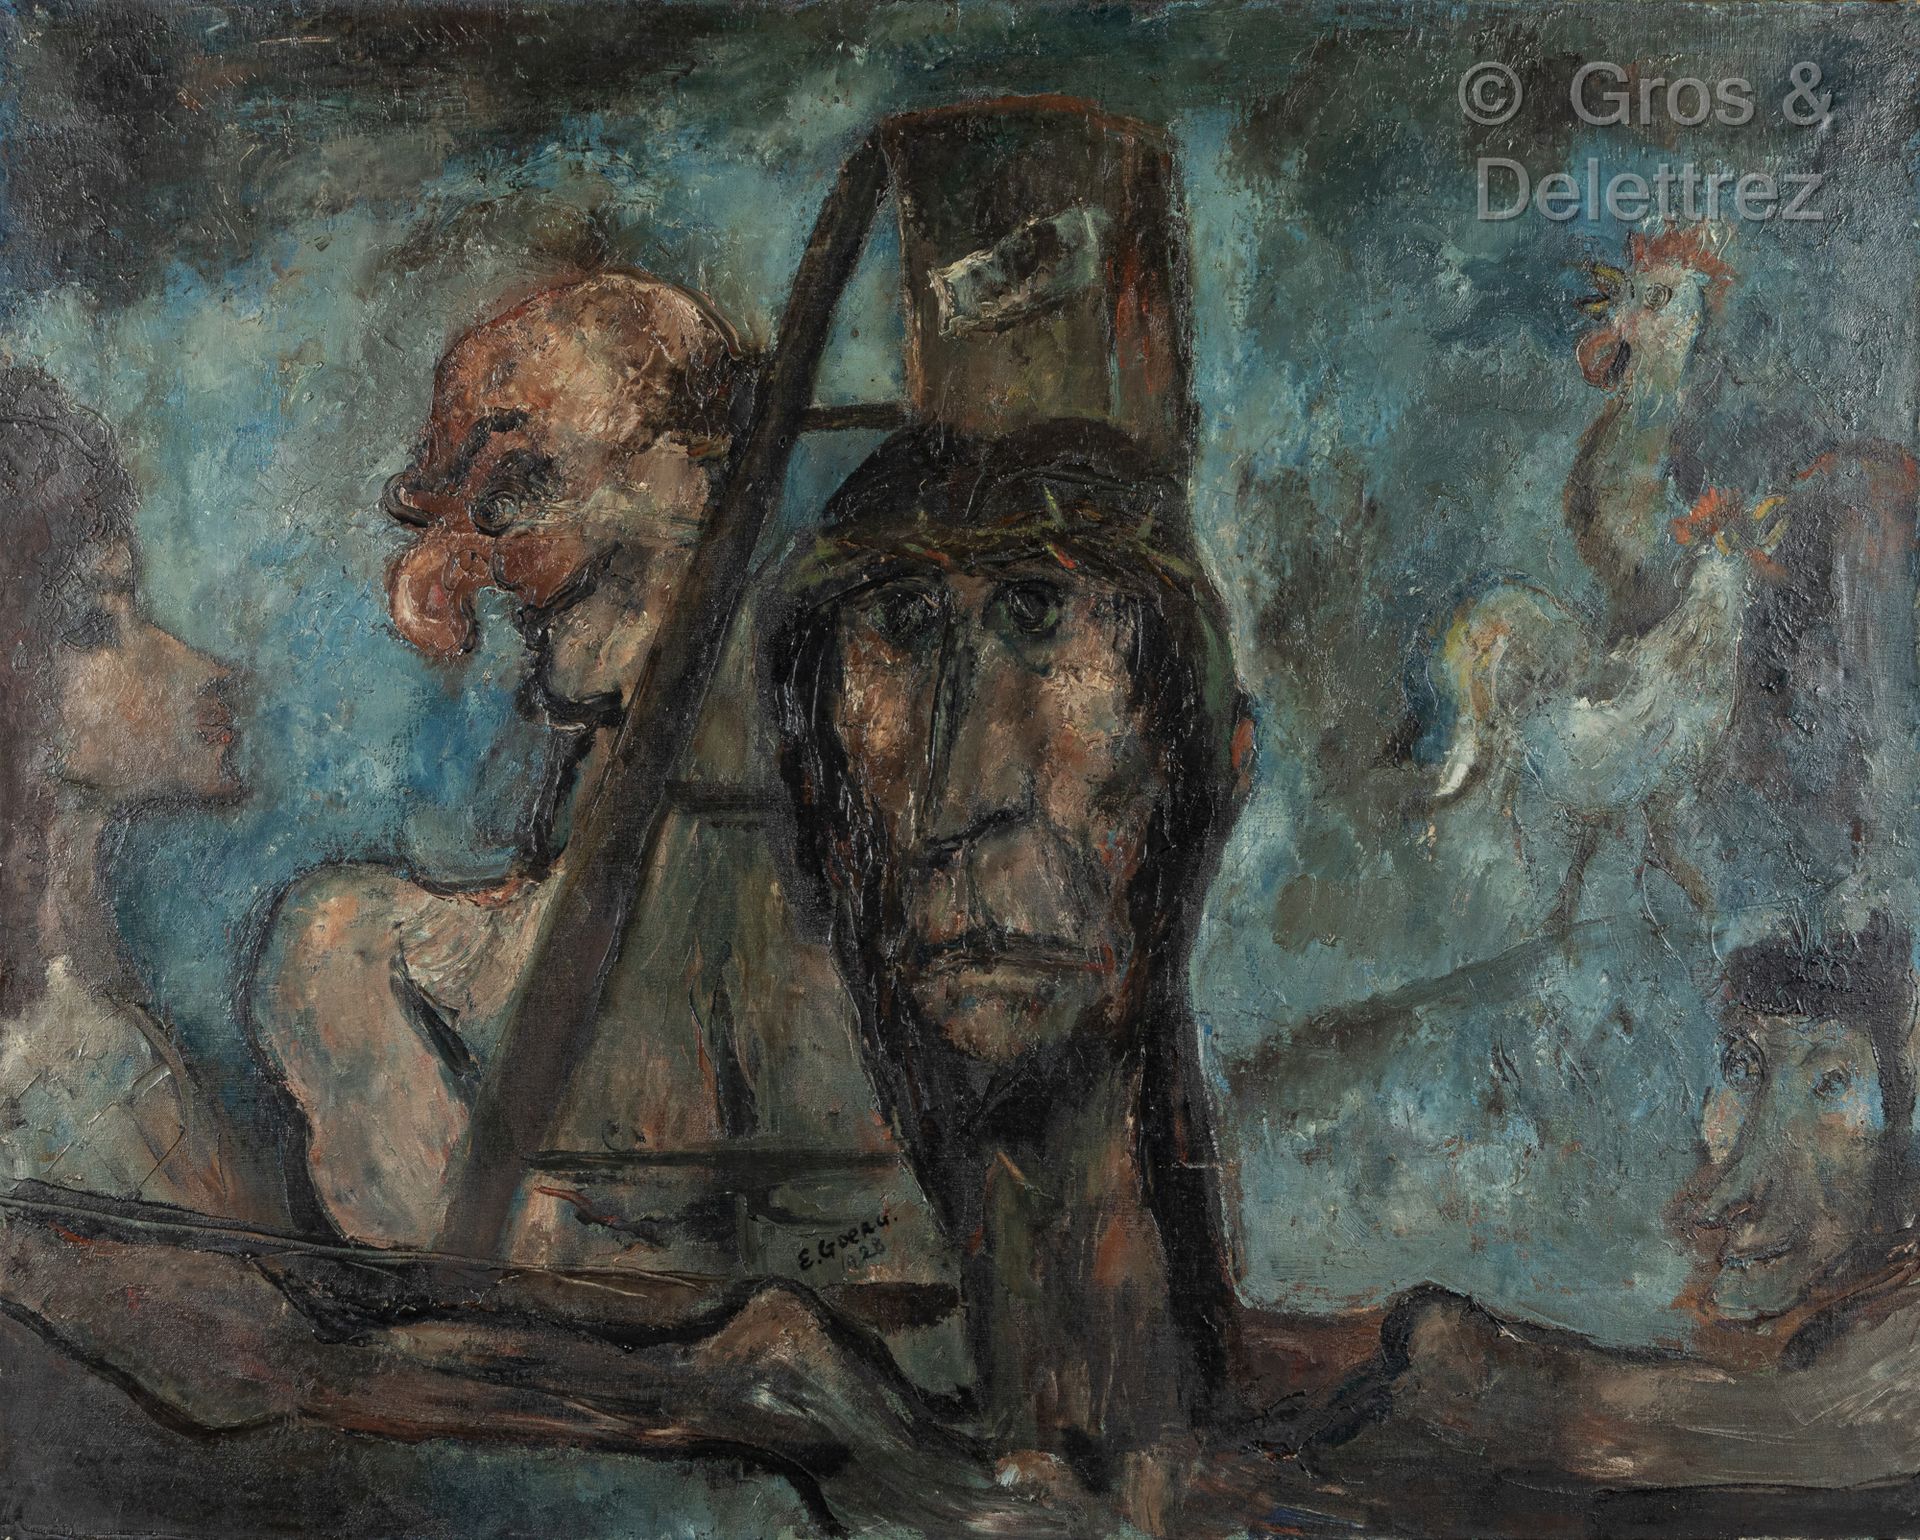 Null 爱德华-古尔格 (1893-1969)

耶稣受难

布面油画，中下部有签名和日期28

72 x 91 厘米